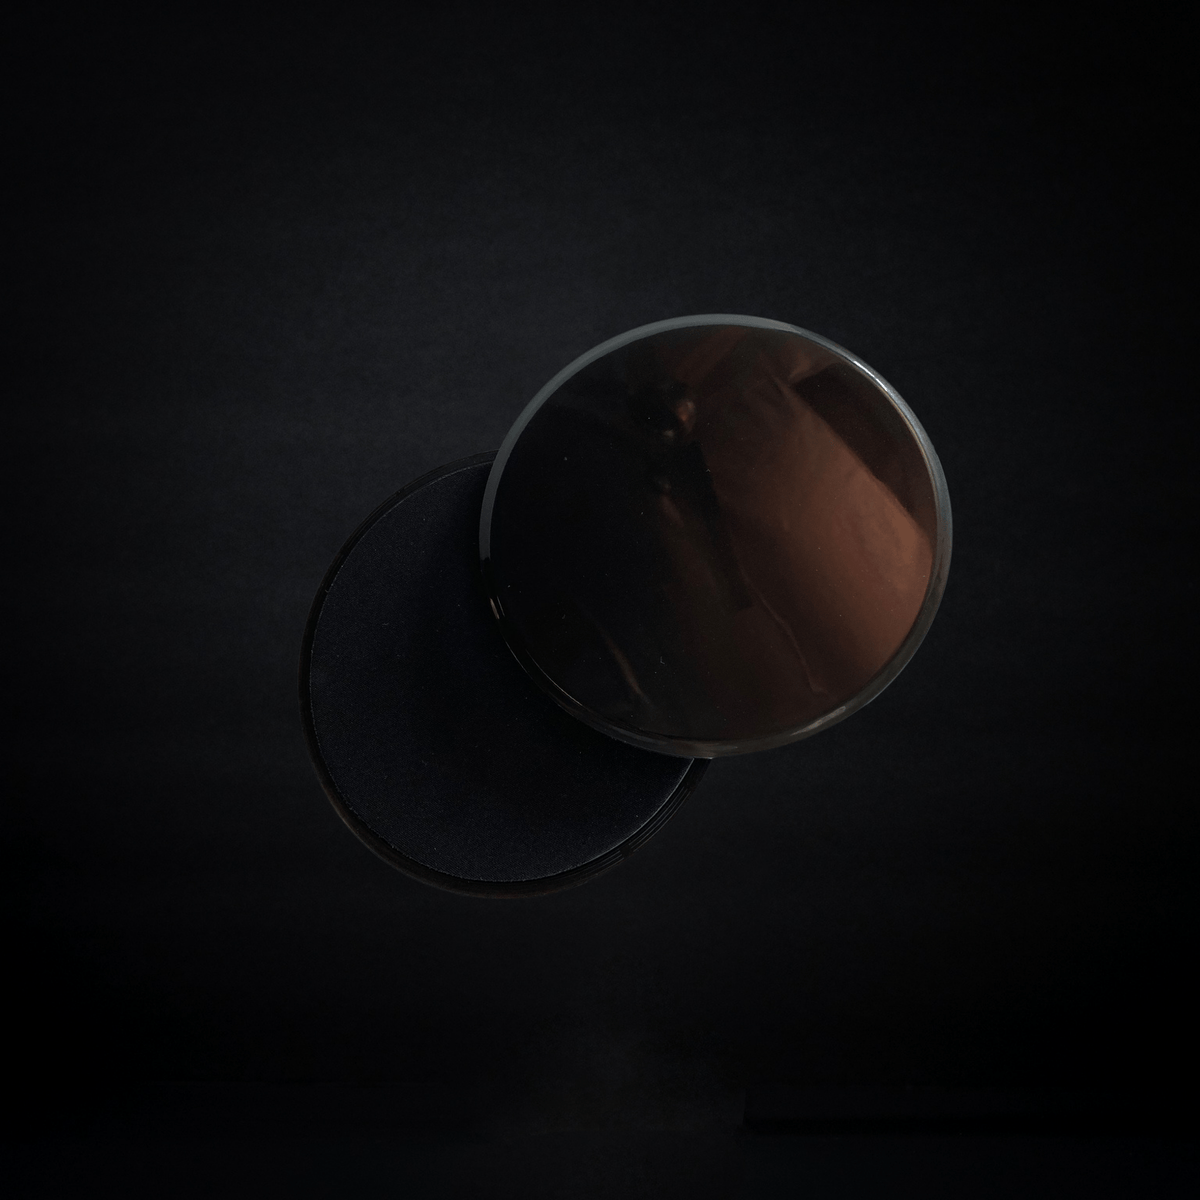 Black core sliding discs on black background